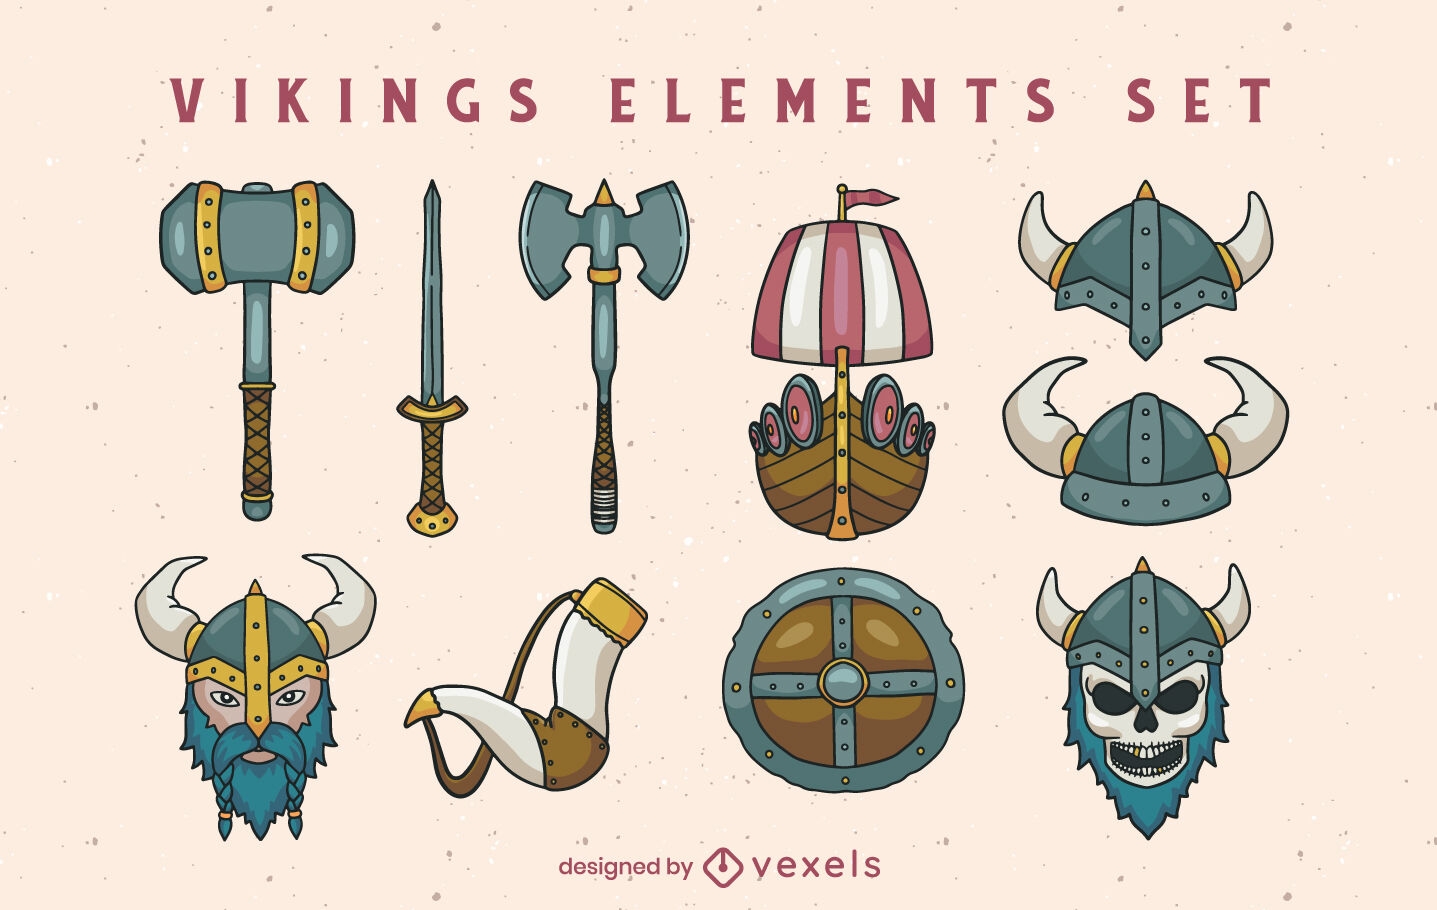 Wikinger-Elemente-Set